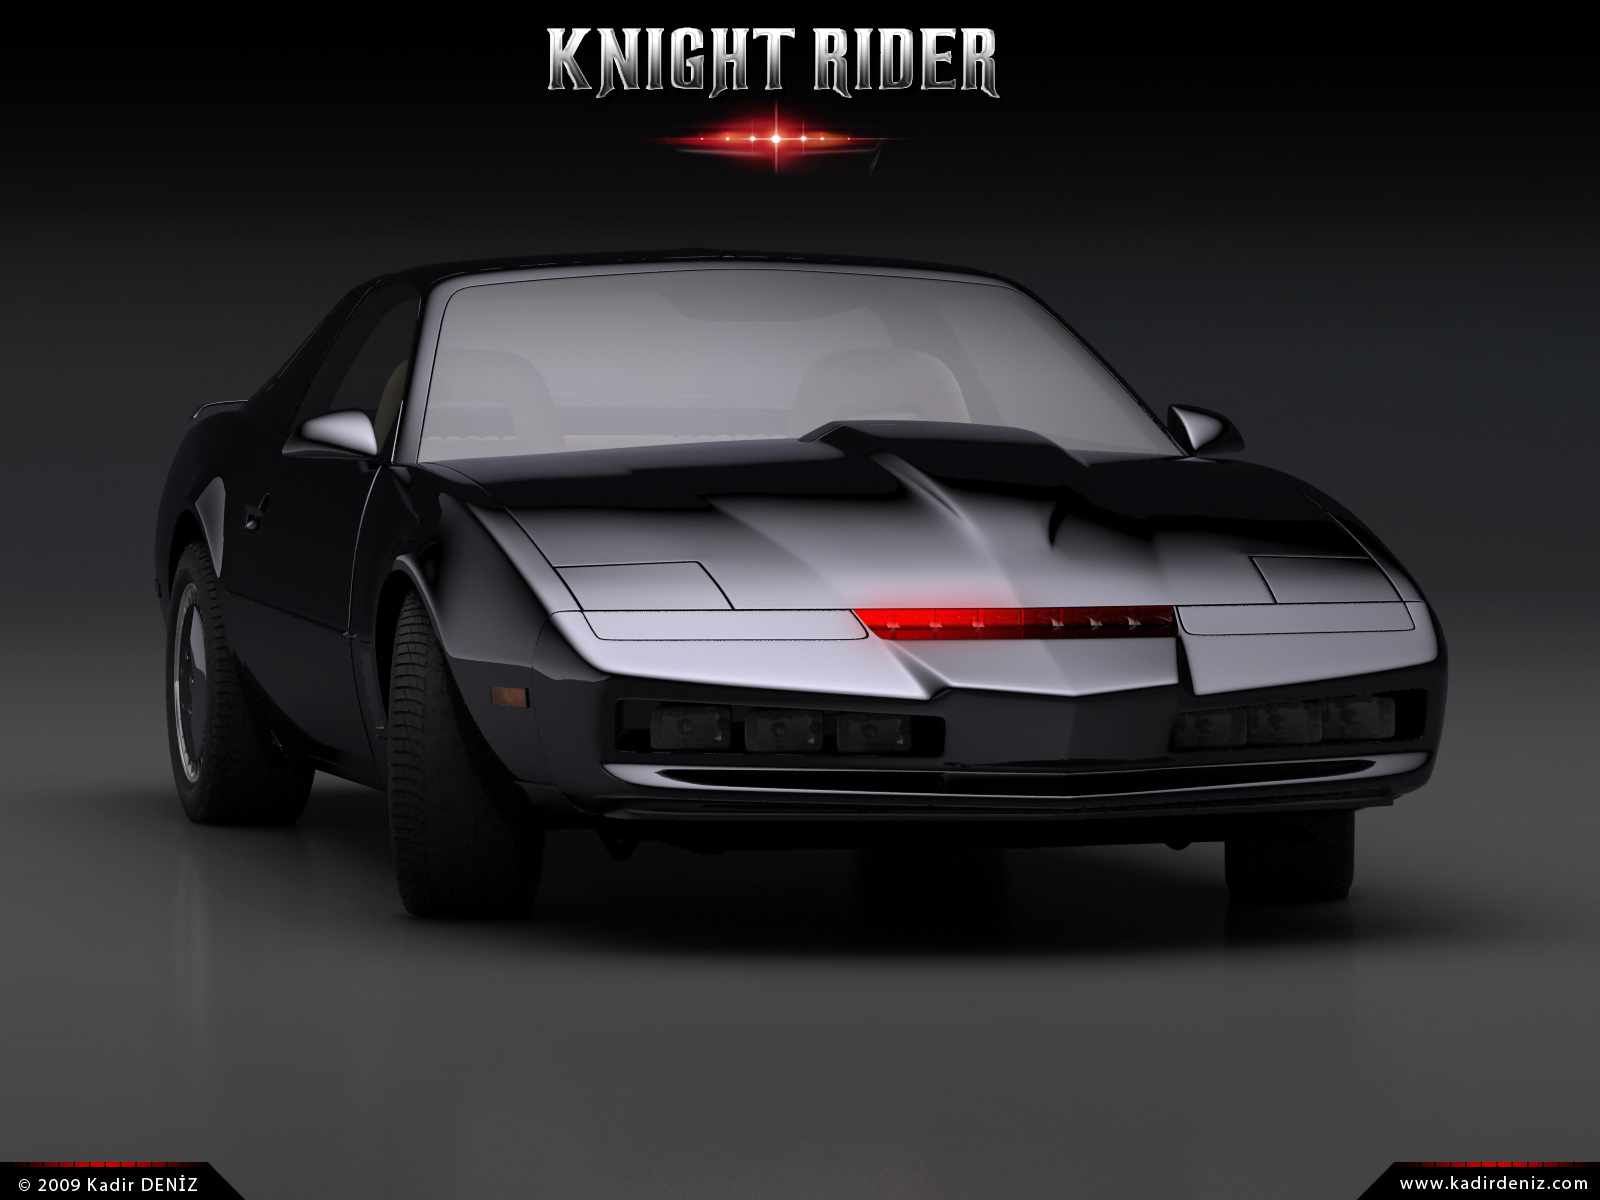 Knight Rider Animated Wallpaper Old Vs New Kni